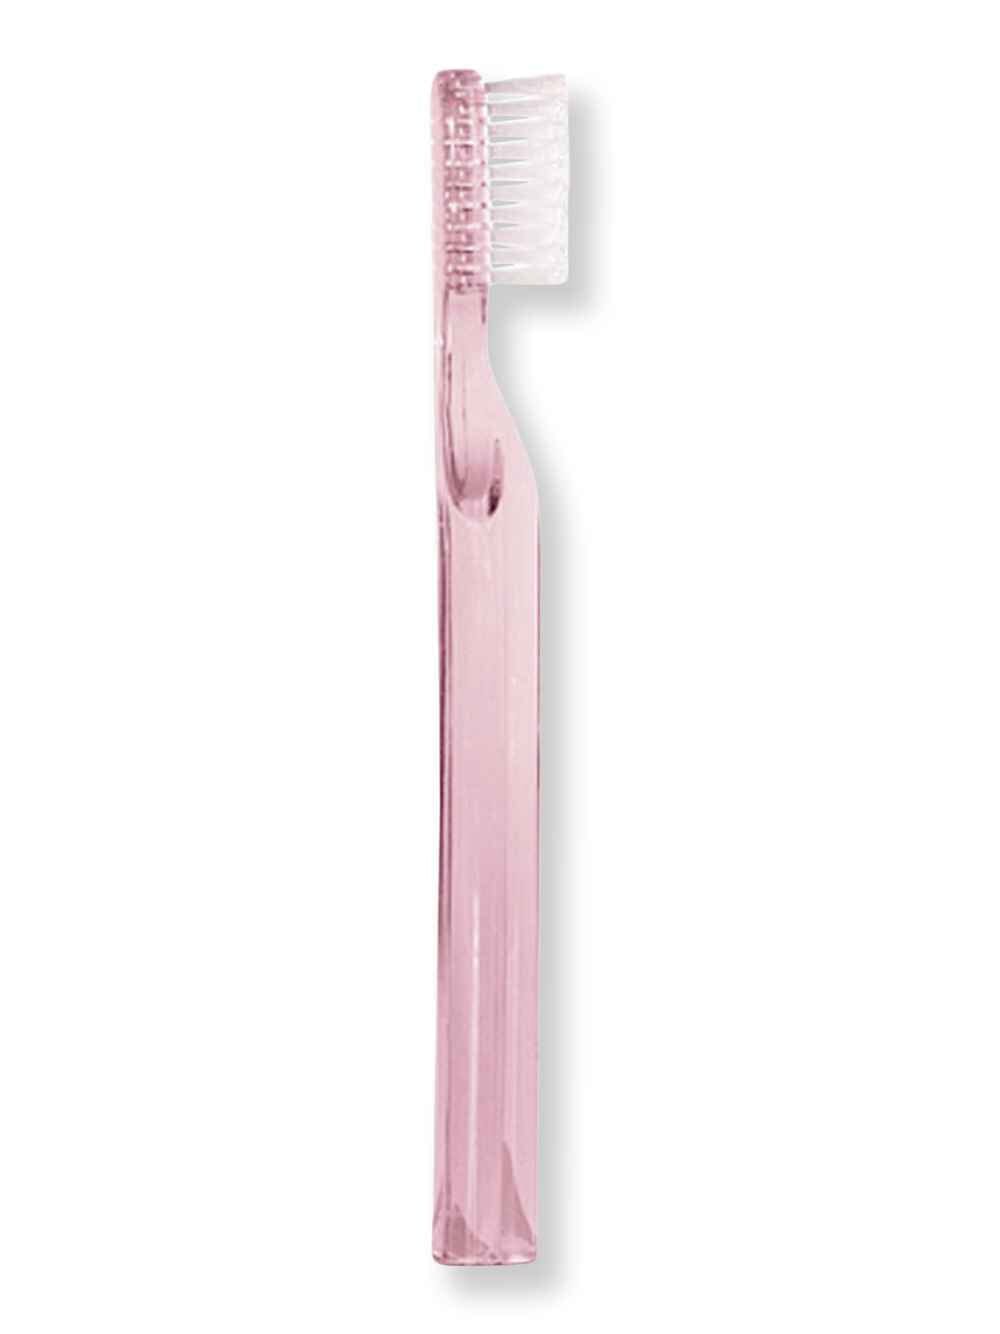 Supersmile Supersmile New Generation 45 Toothbrush Pink Electric & Manual Toothbrushes 